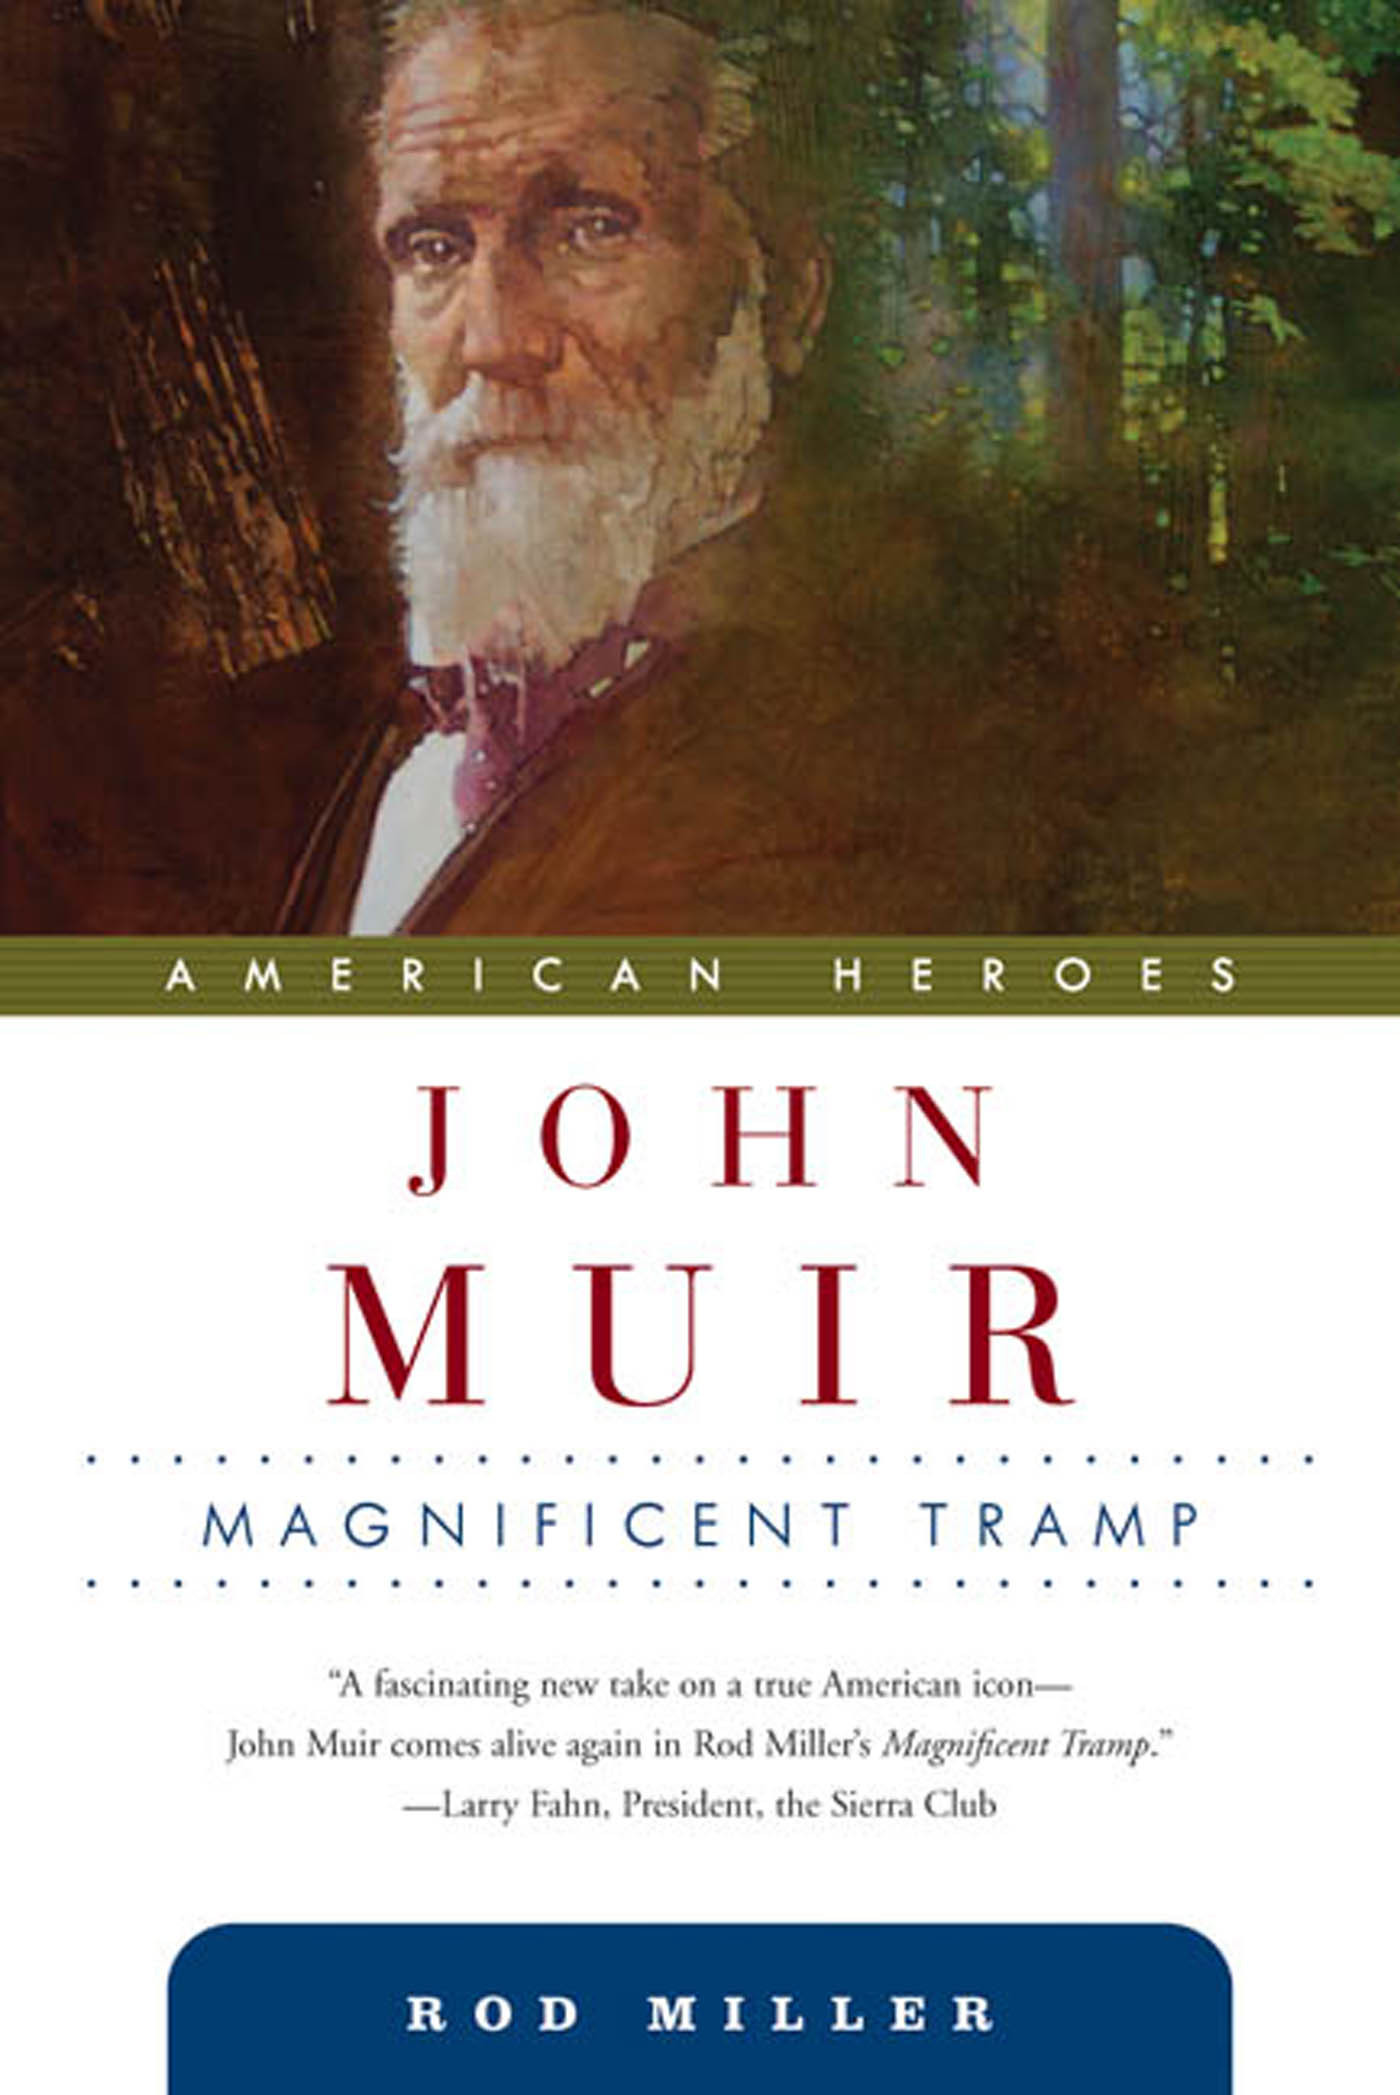 John Muir : Magnificent Tramp by Rod Miller